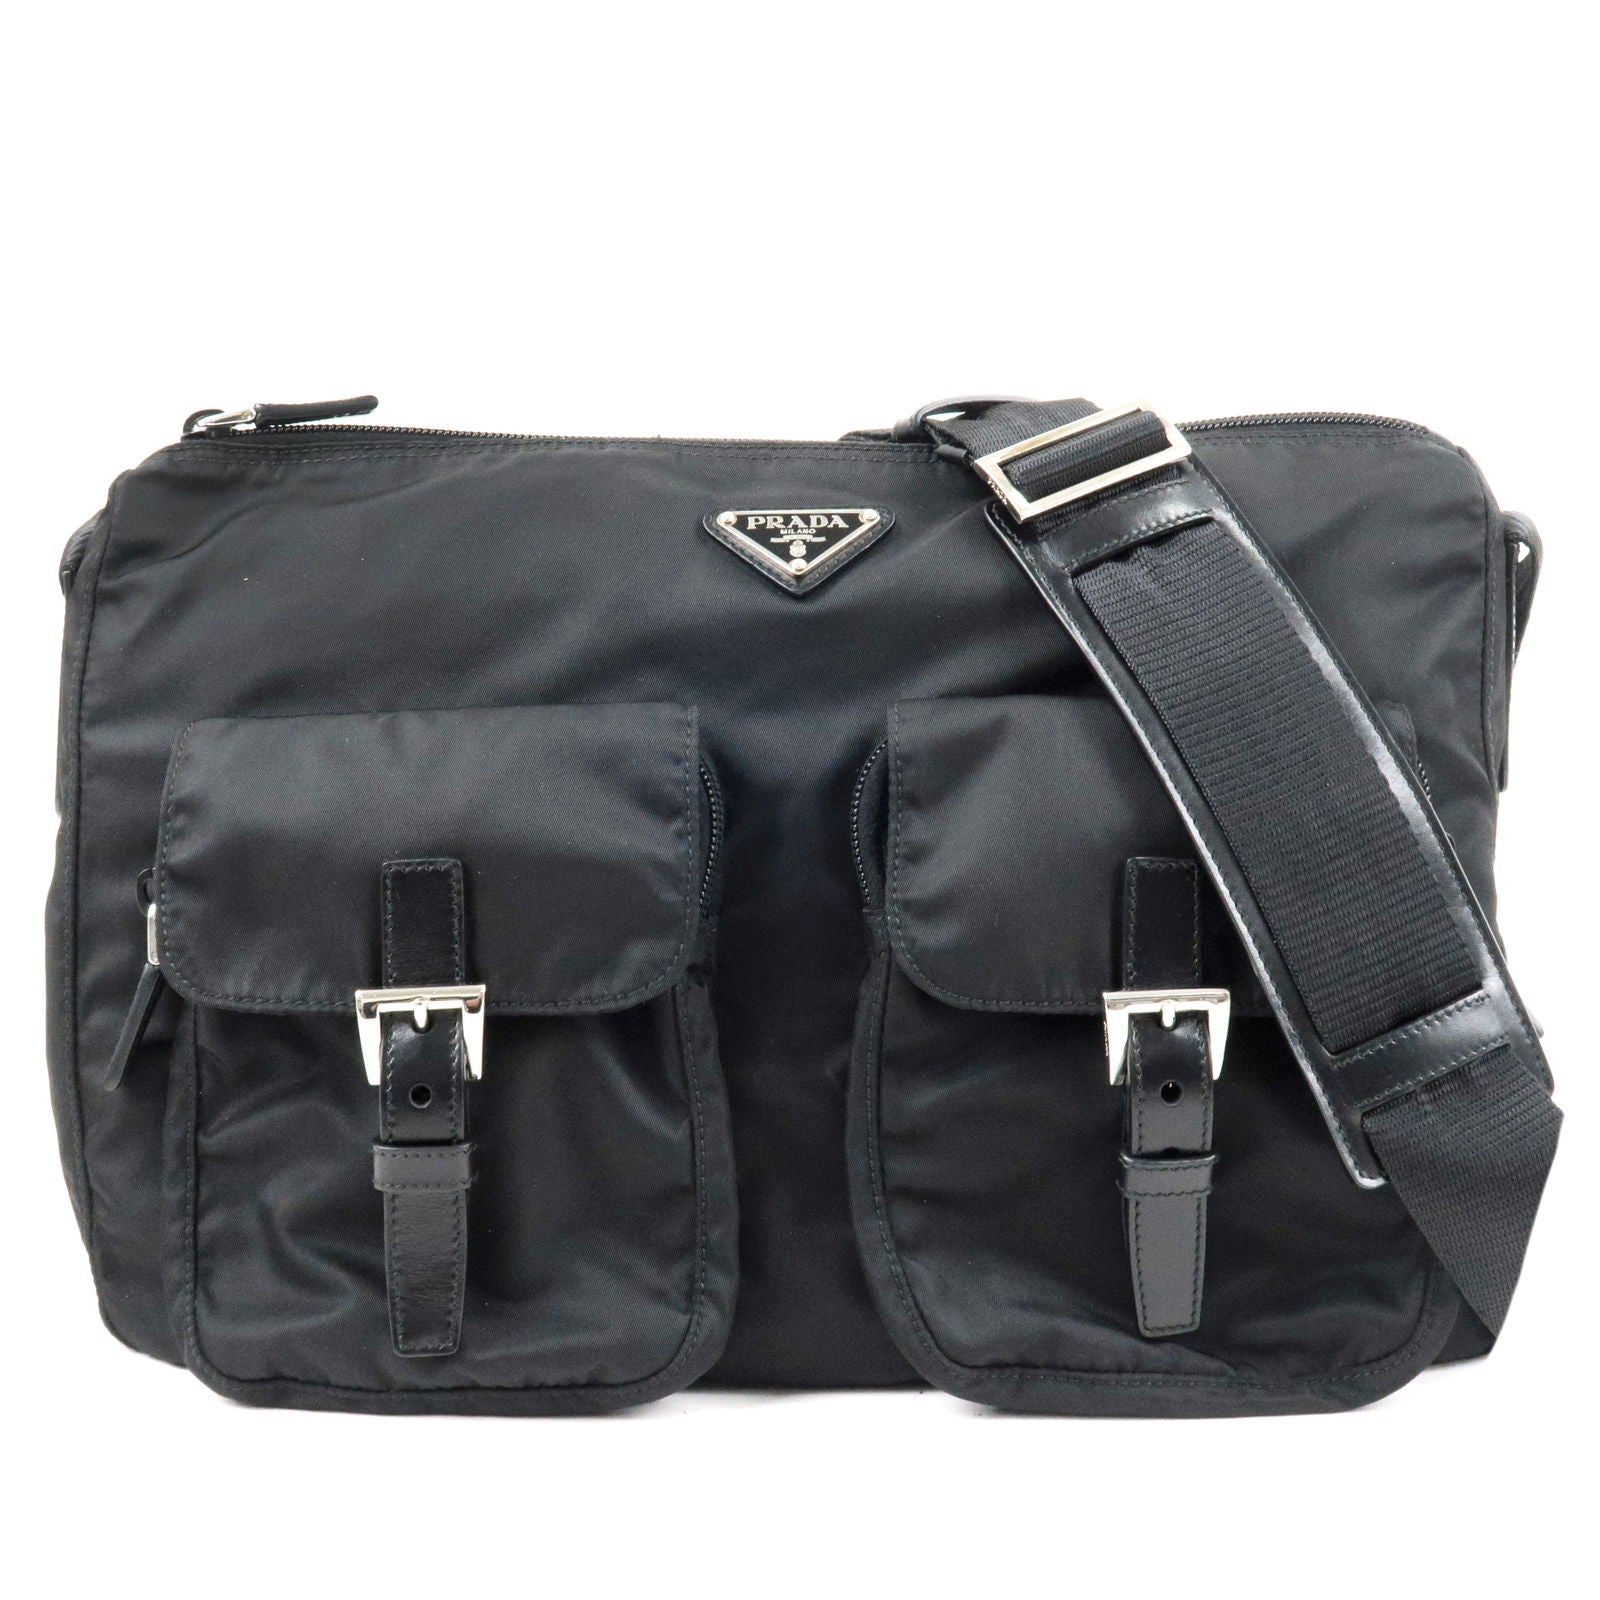 PRADA-Logo-Nylon-Leather-Shoulder-Bag-NERO-Black-BT0644